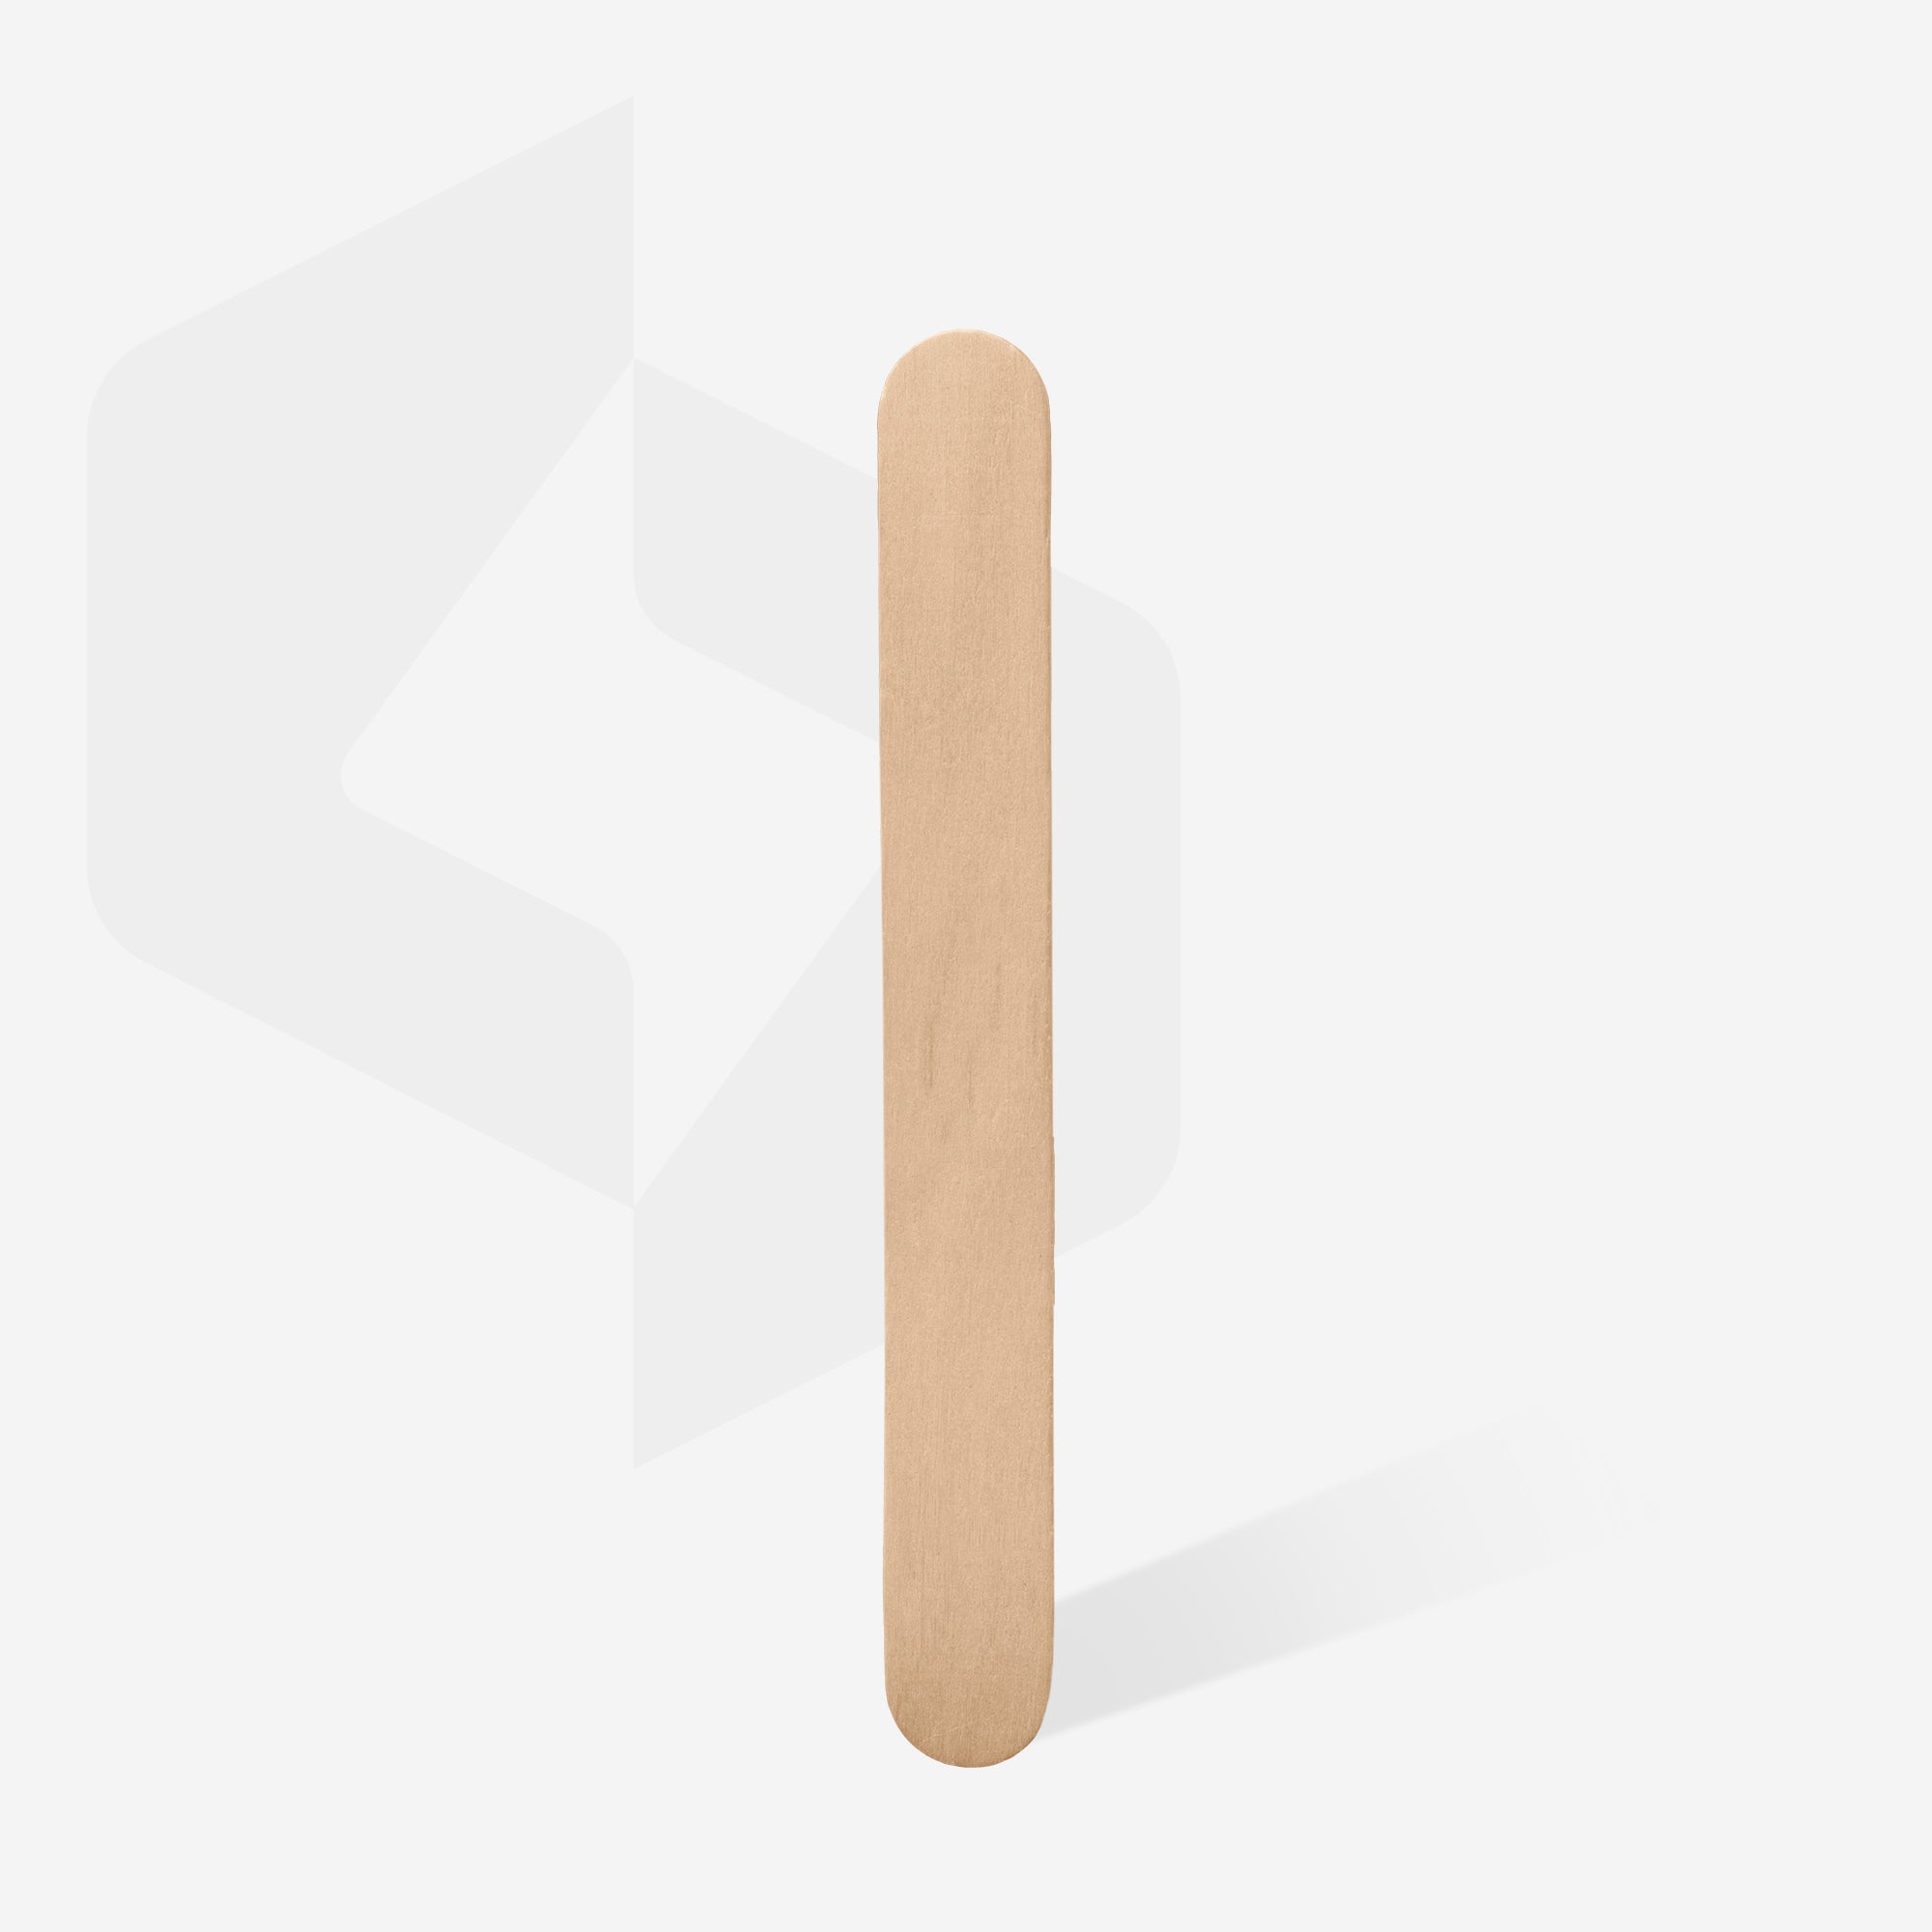 Staleks Pro Expert 30 Wooden Wax Applicator Stick Spatula